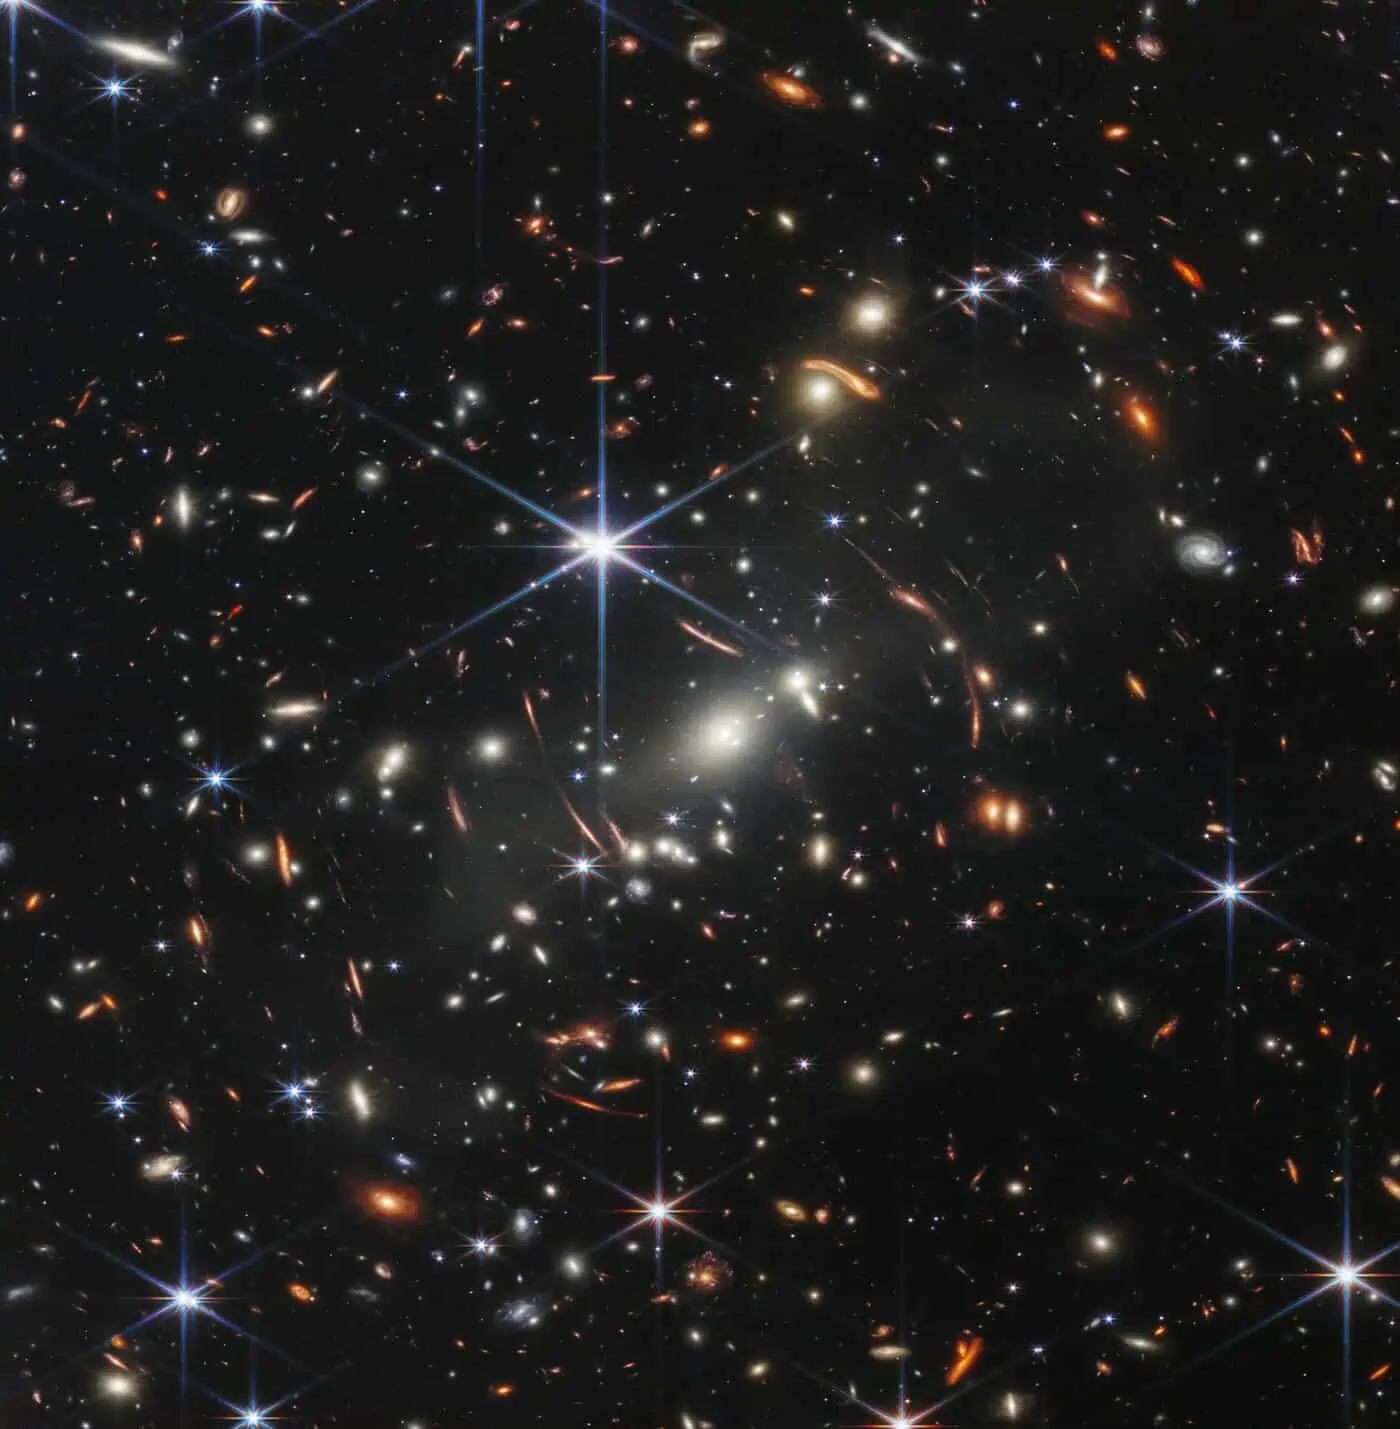 Galaxy-Cluster-SMACS-0723-James-Webb-Telescope